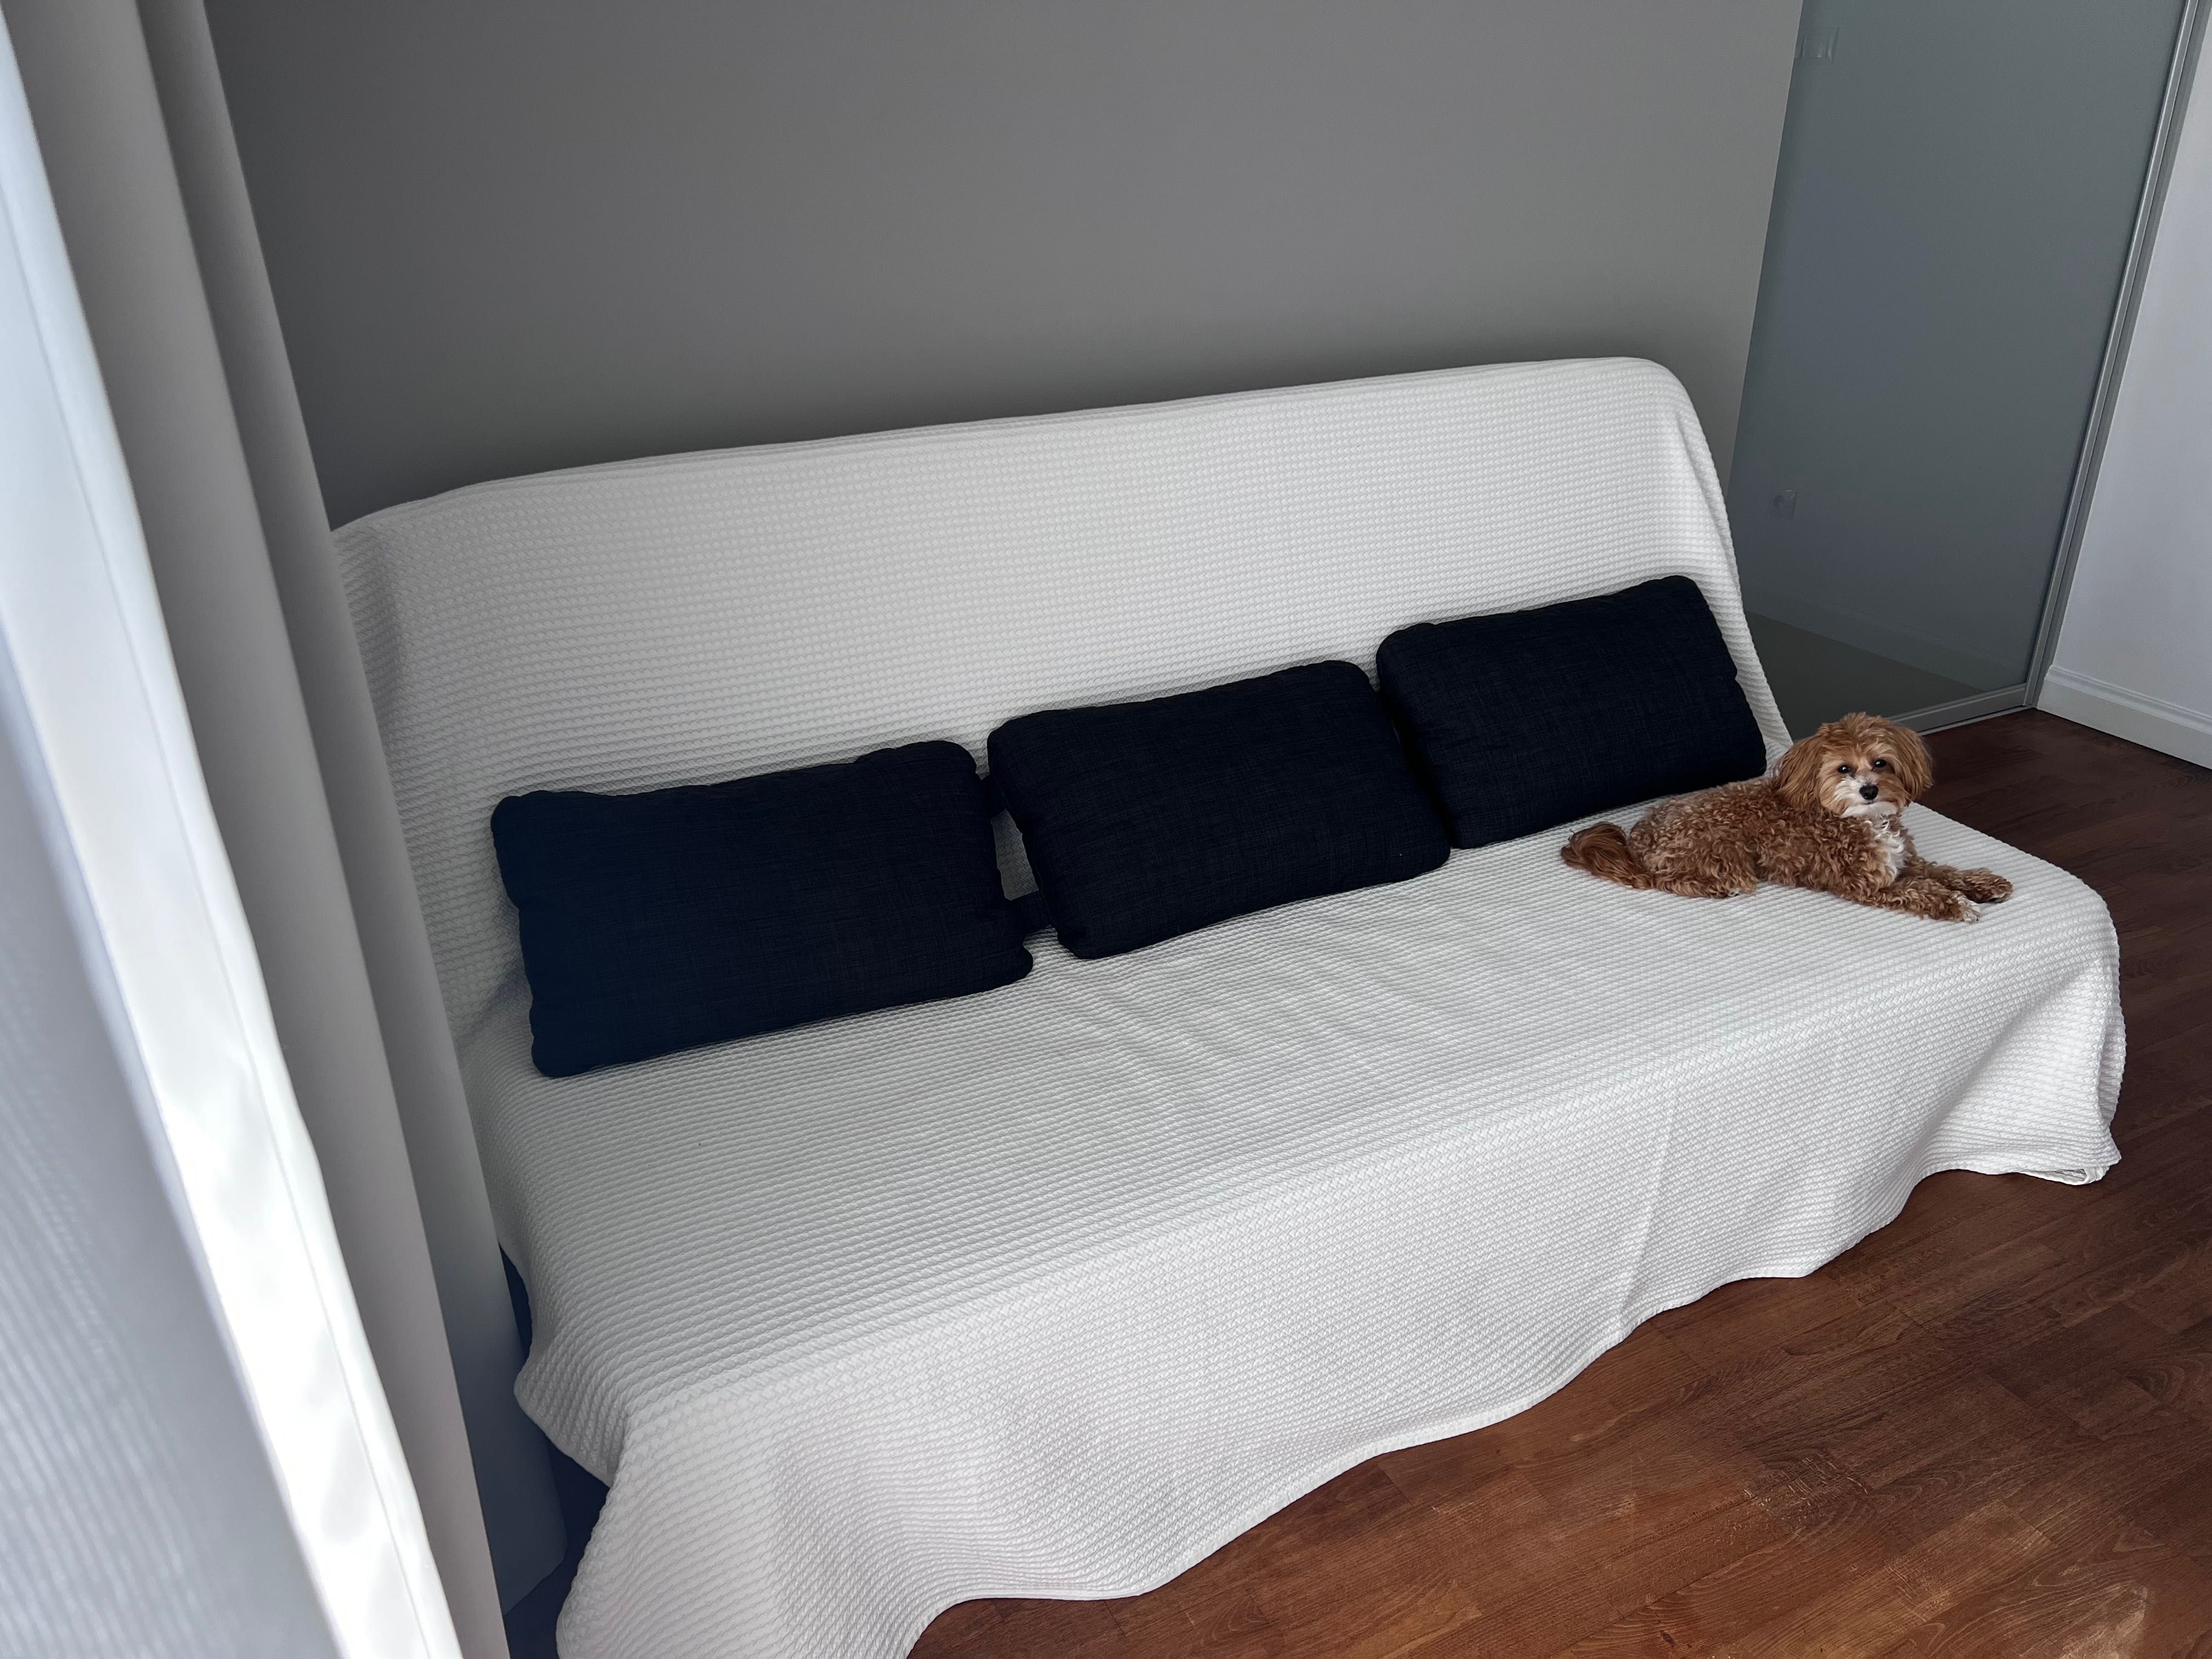 Kanapa / sofa / łóżko IKEA